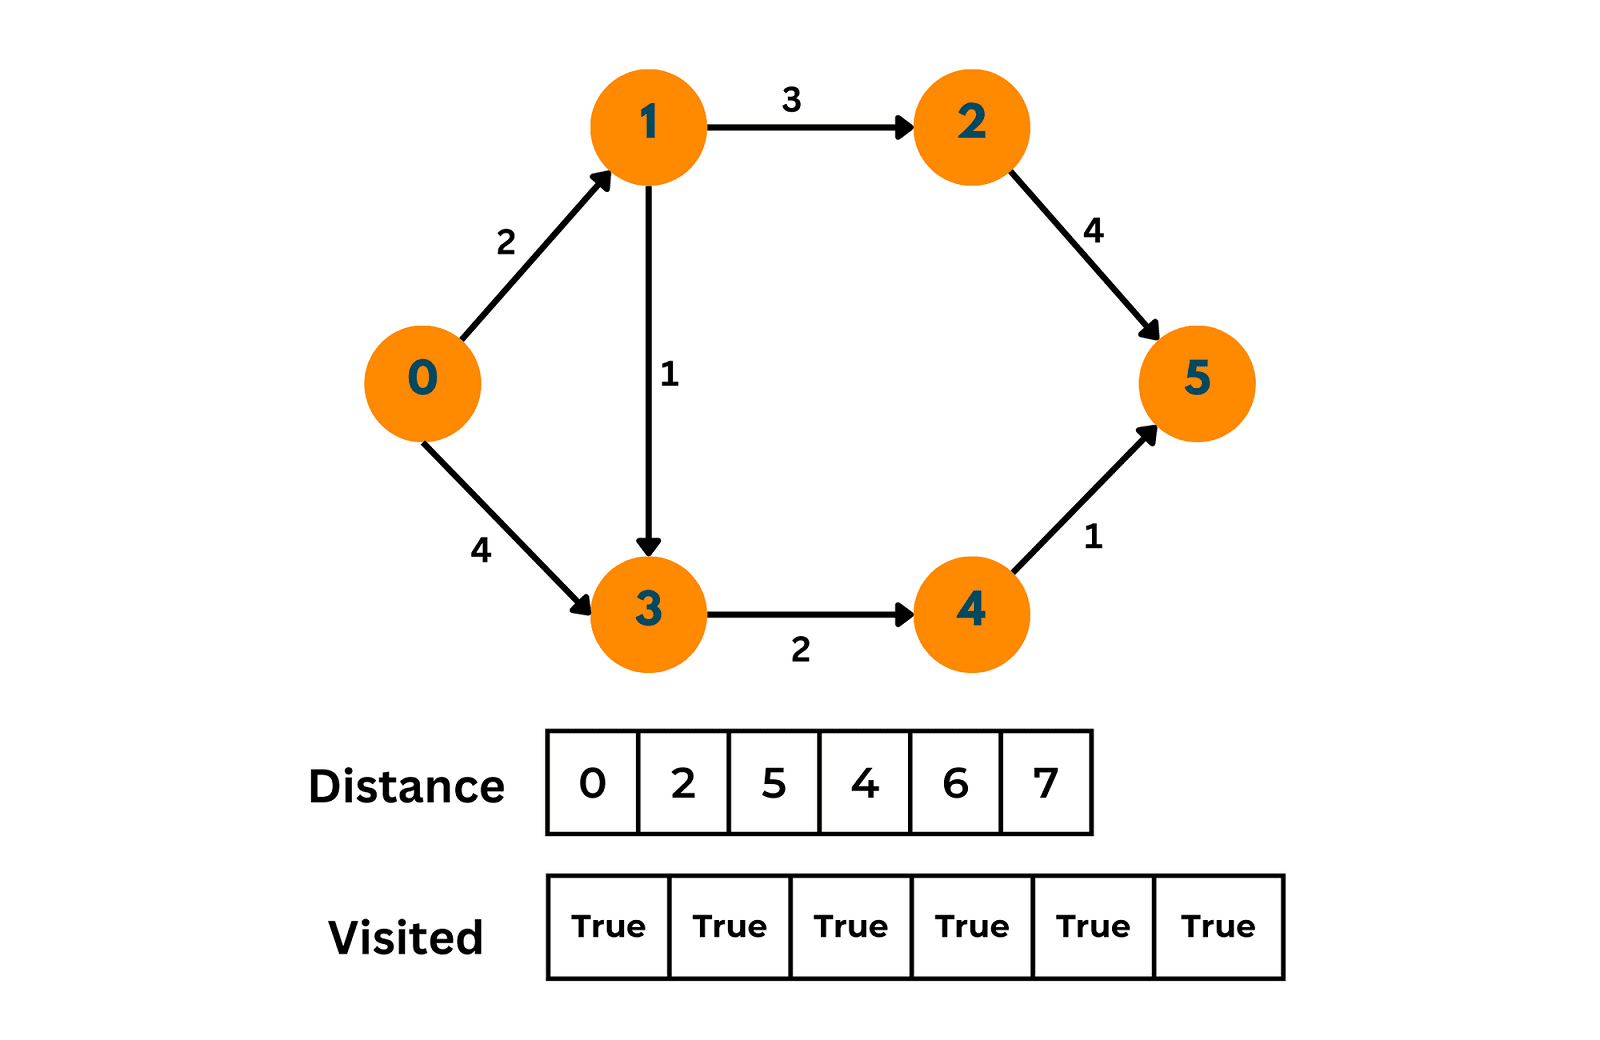  Dijkstra's algorithm using adjcency matrix